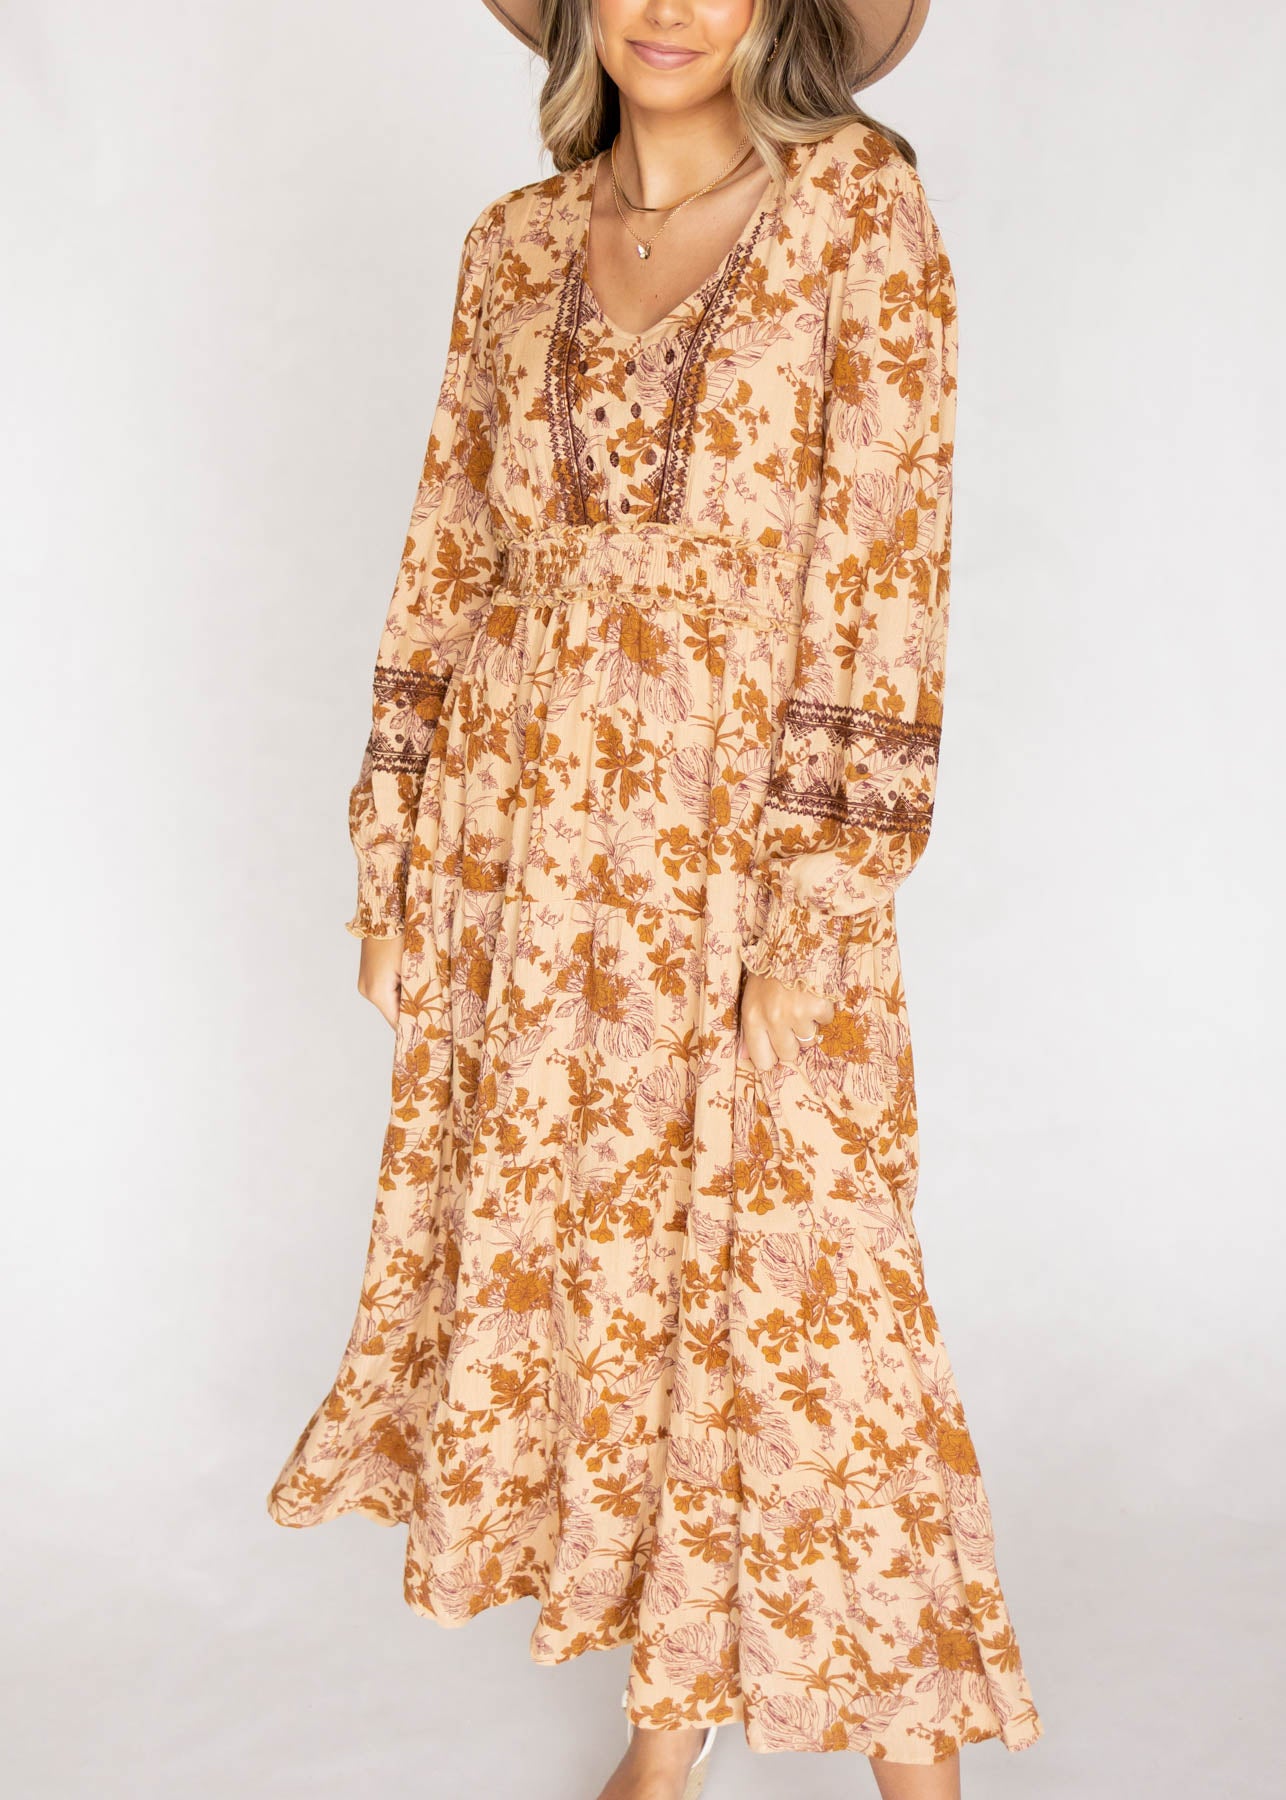 Long sleeve floral camel dress